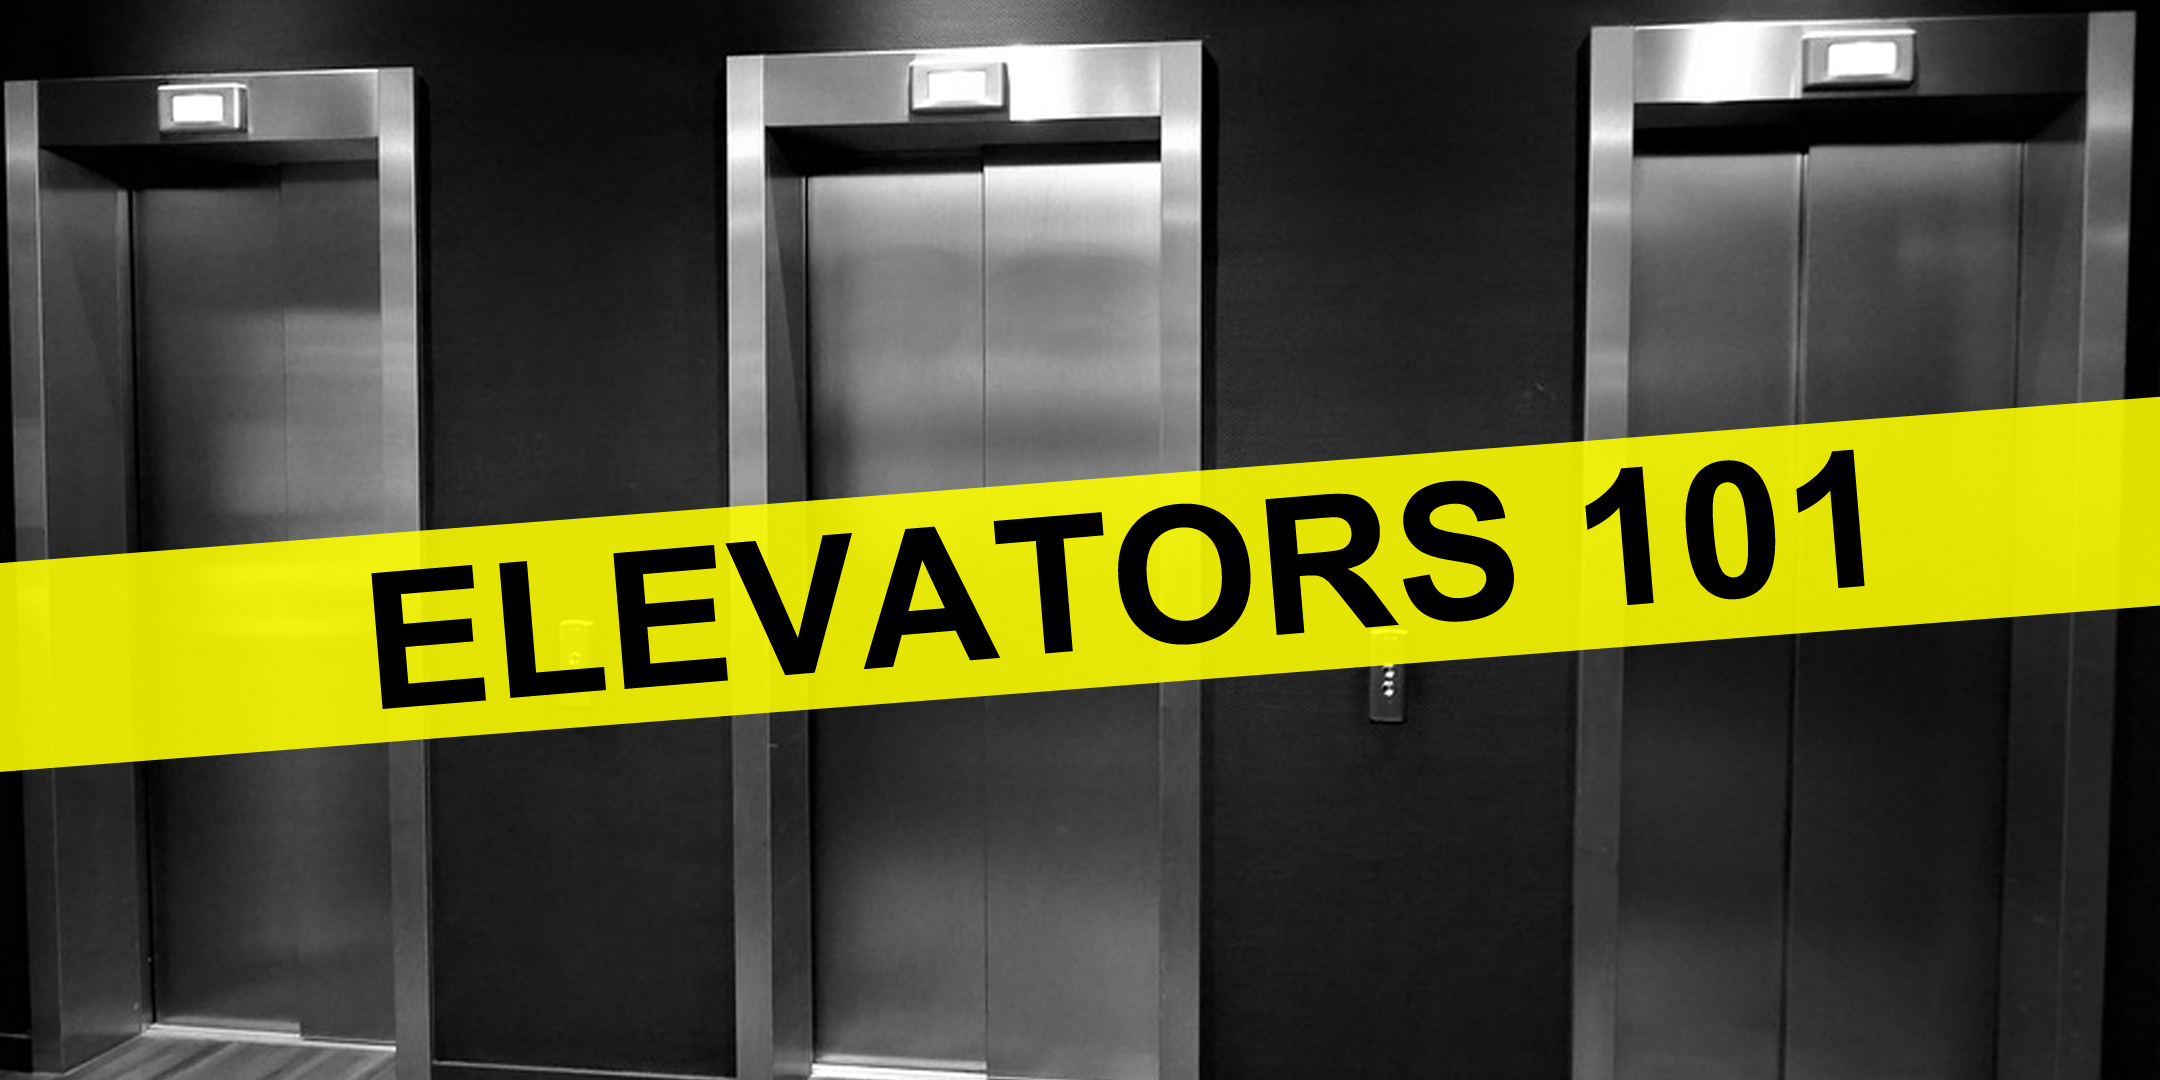 elevators101-2160x1080.jpg